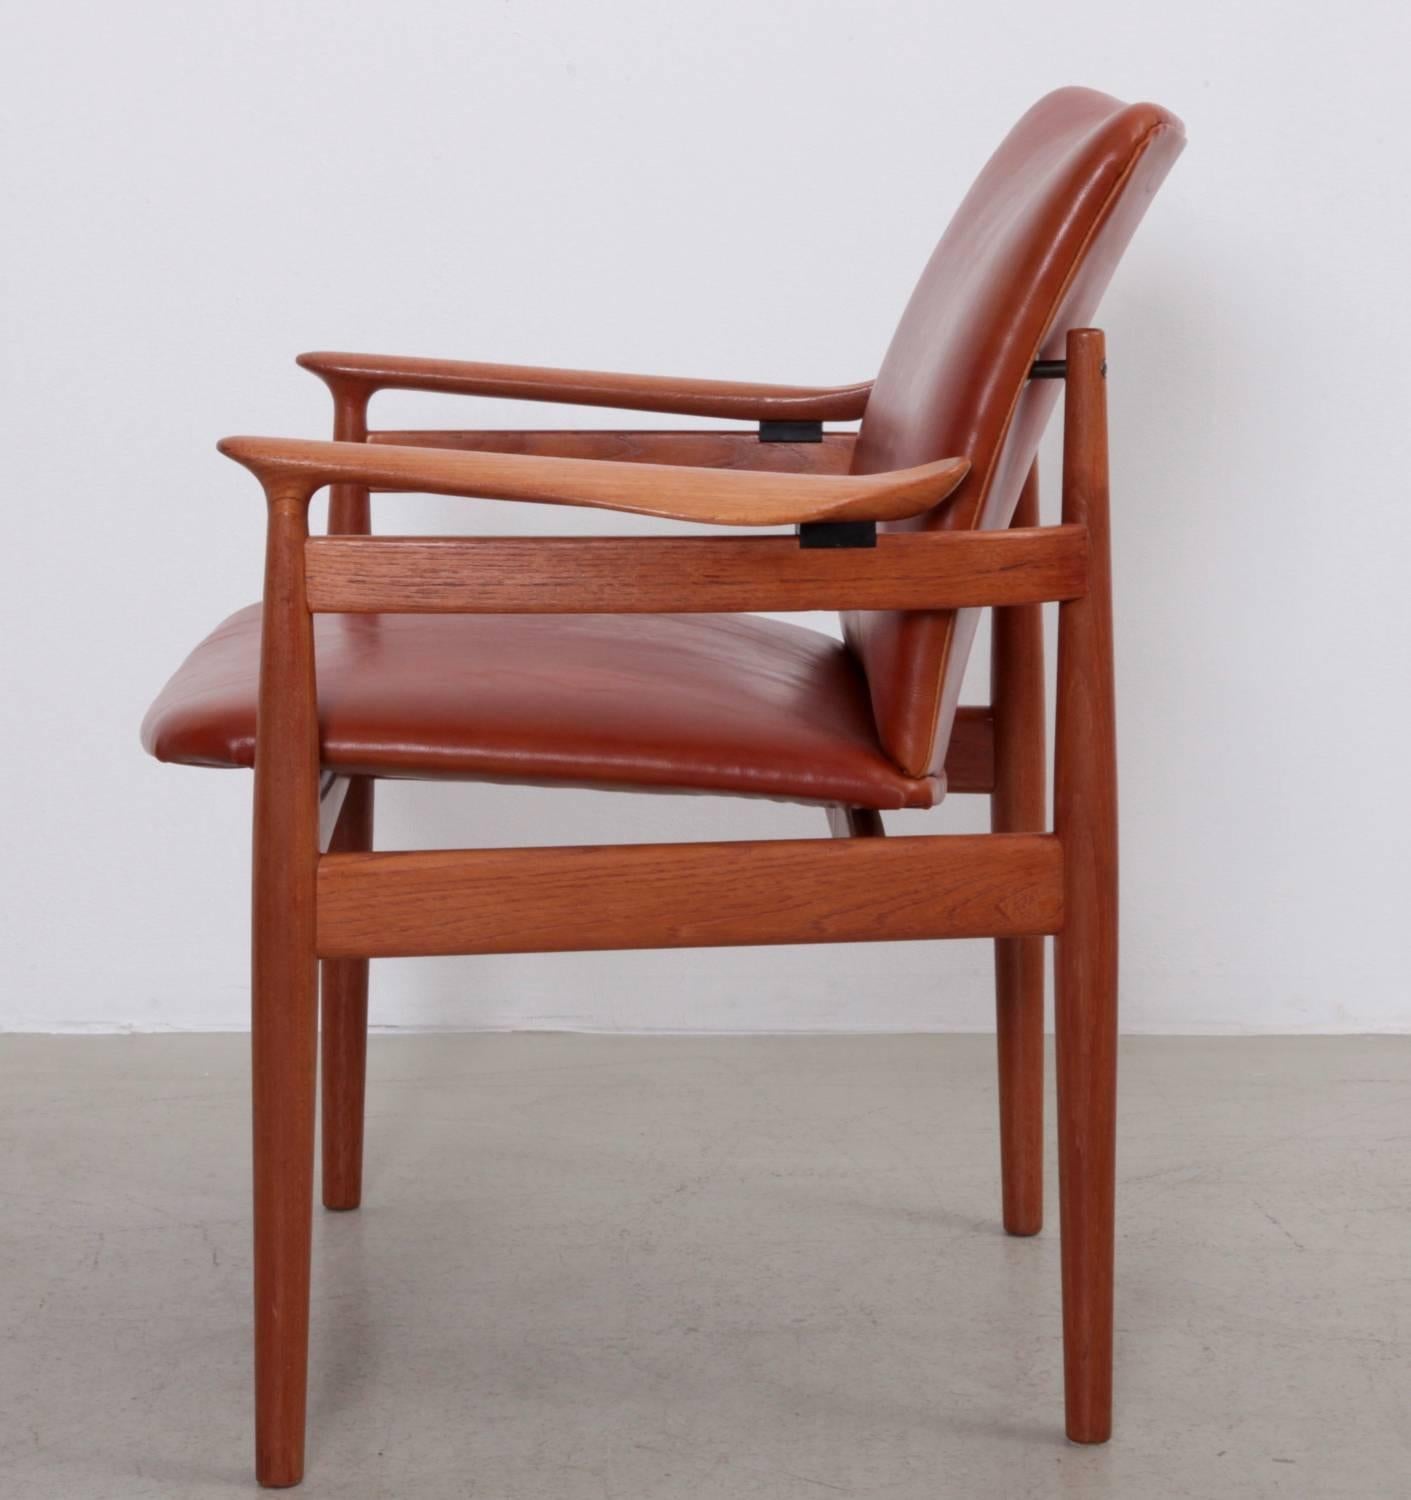 Mid-Century Modern Arm or Desk Chair 192 by Finn Juhl for France & Son, Denmark, 1963